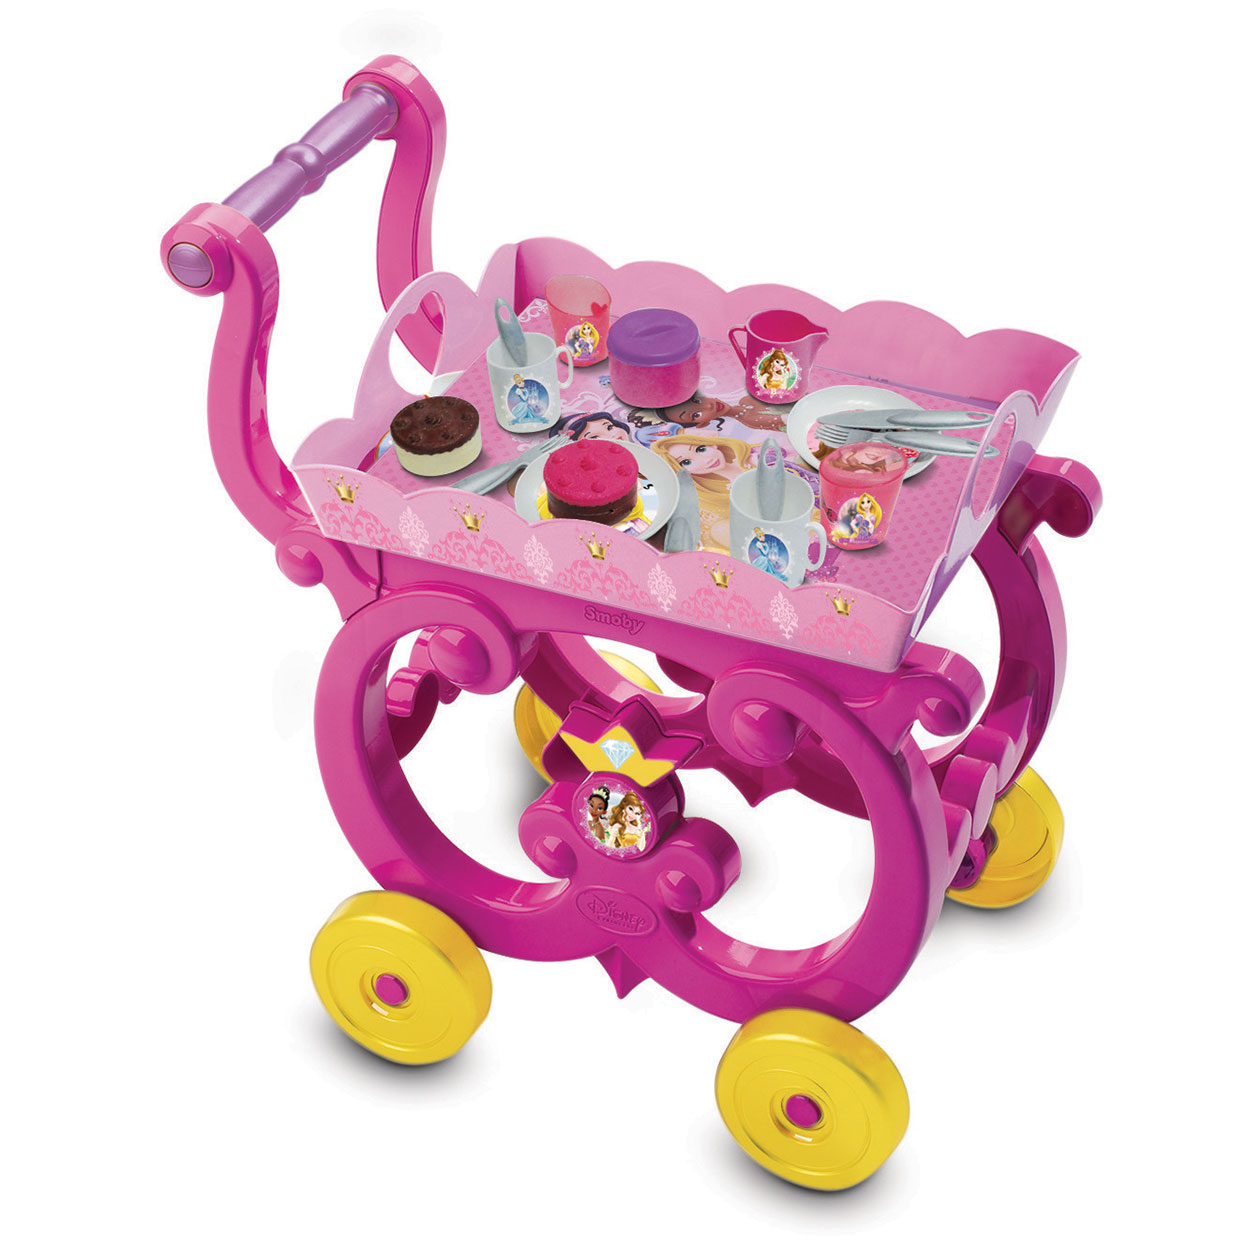 Grap lof Uitdrukking Smoby Disney Princess Serving Trolley | Thimble Toys